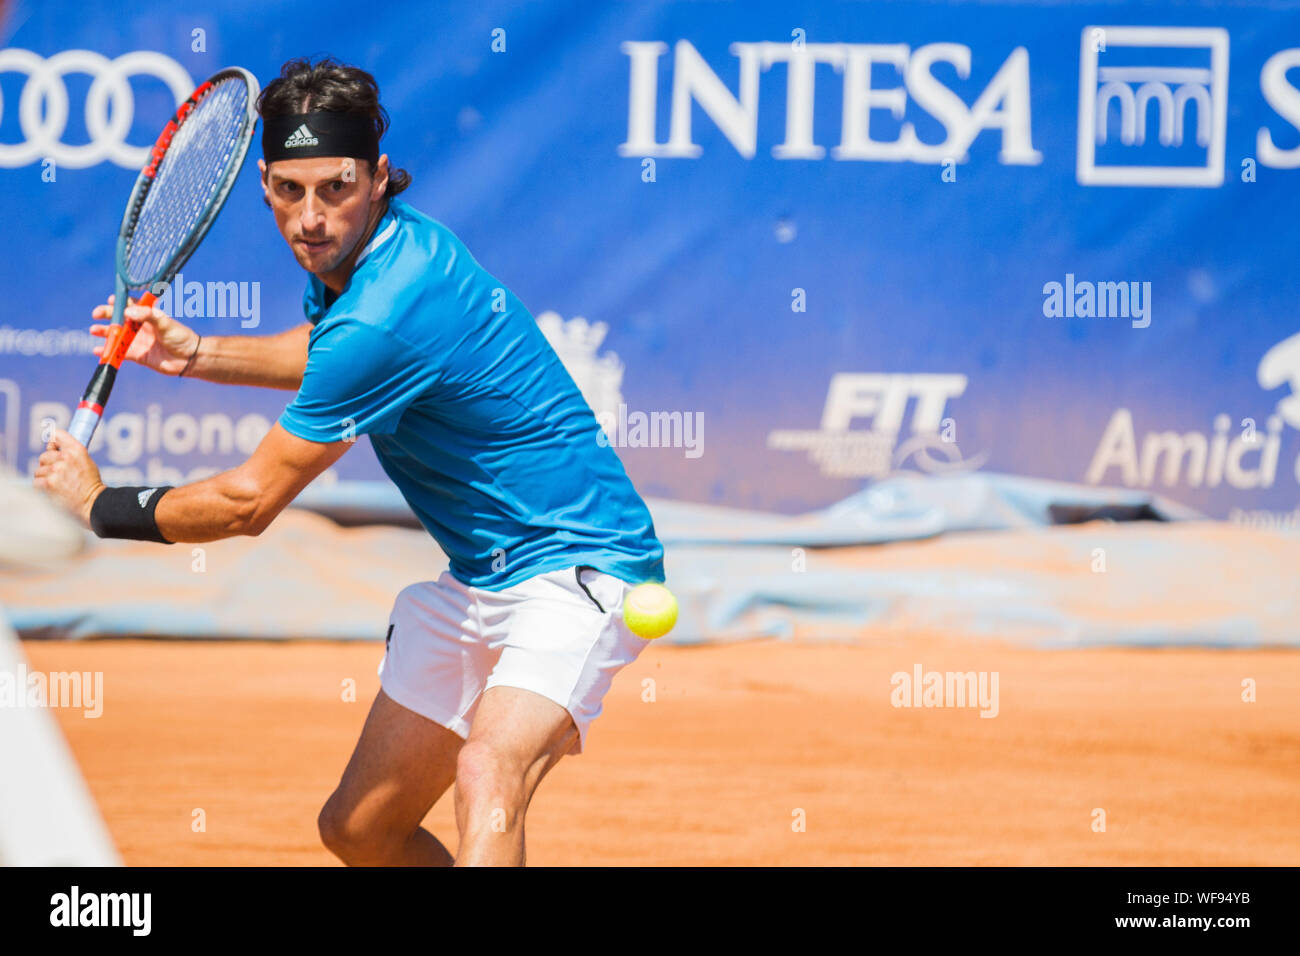 ANDREA ARNABOLDI during Atp Challenger Como 2019, Como, Italy, 30 Aug 2019,  Tennis Tennis Internationals Stock Photo - Alamy